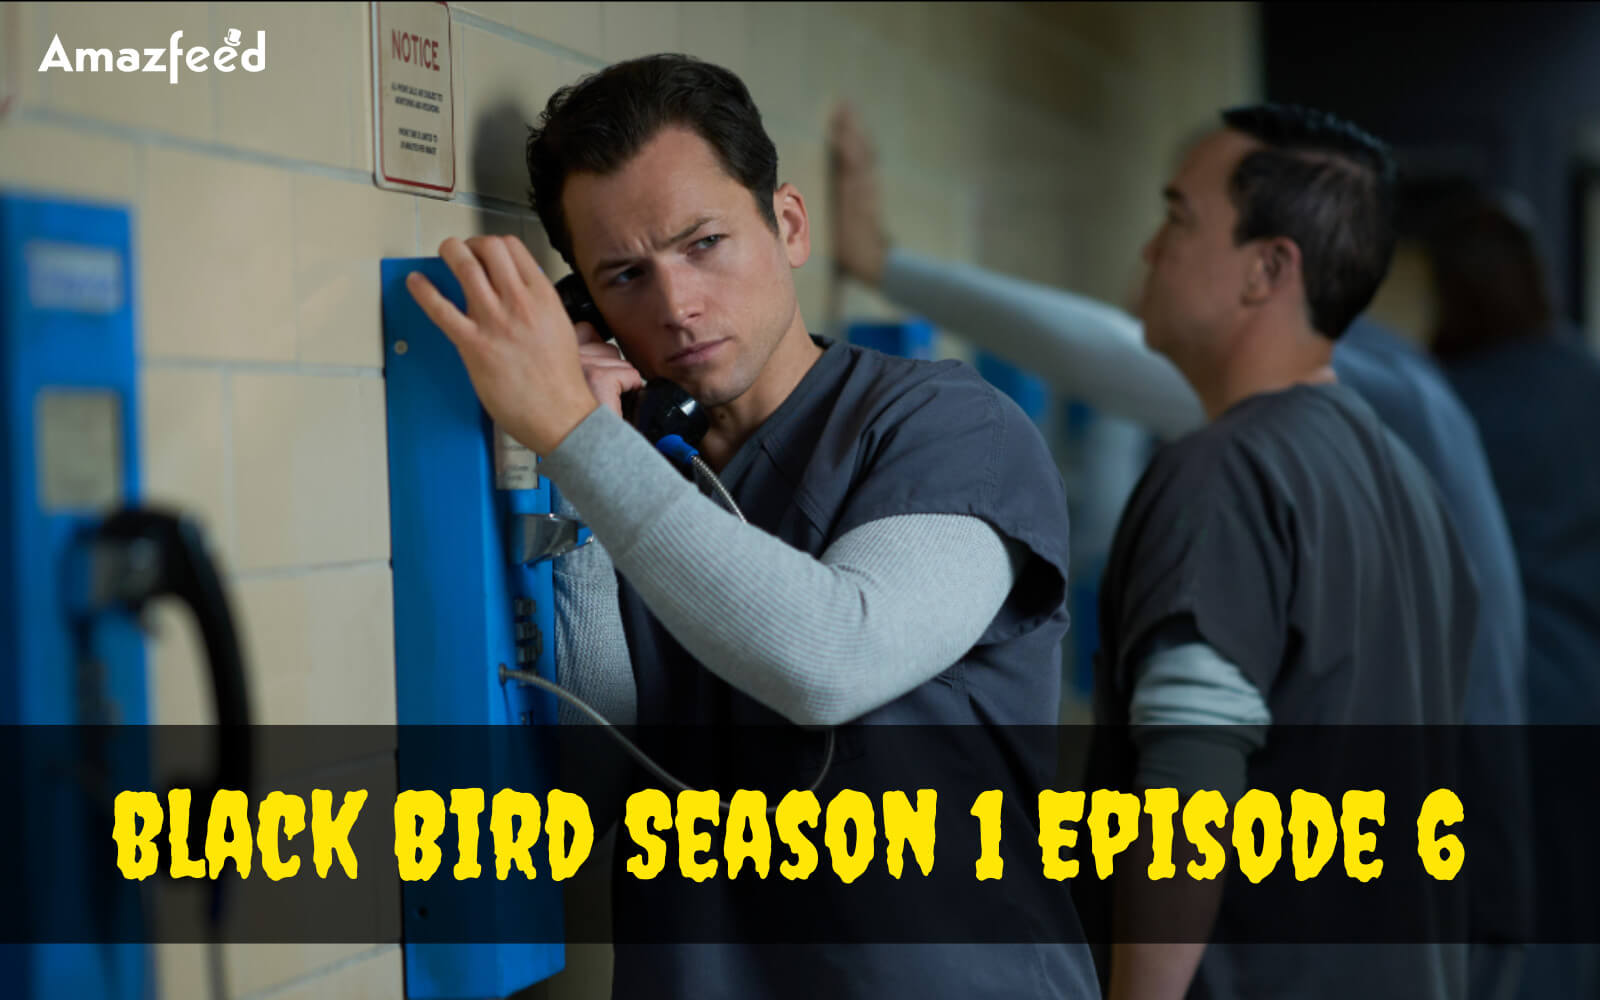 black Bird Season 1 Episode 6 release date